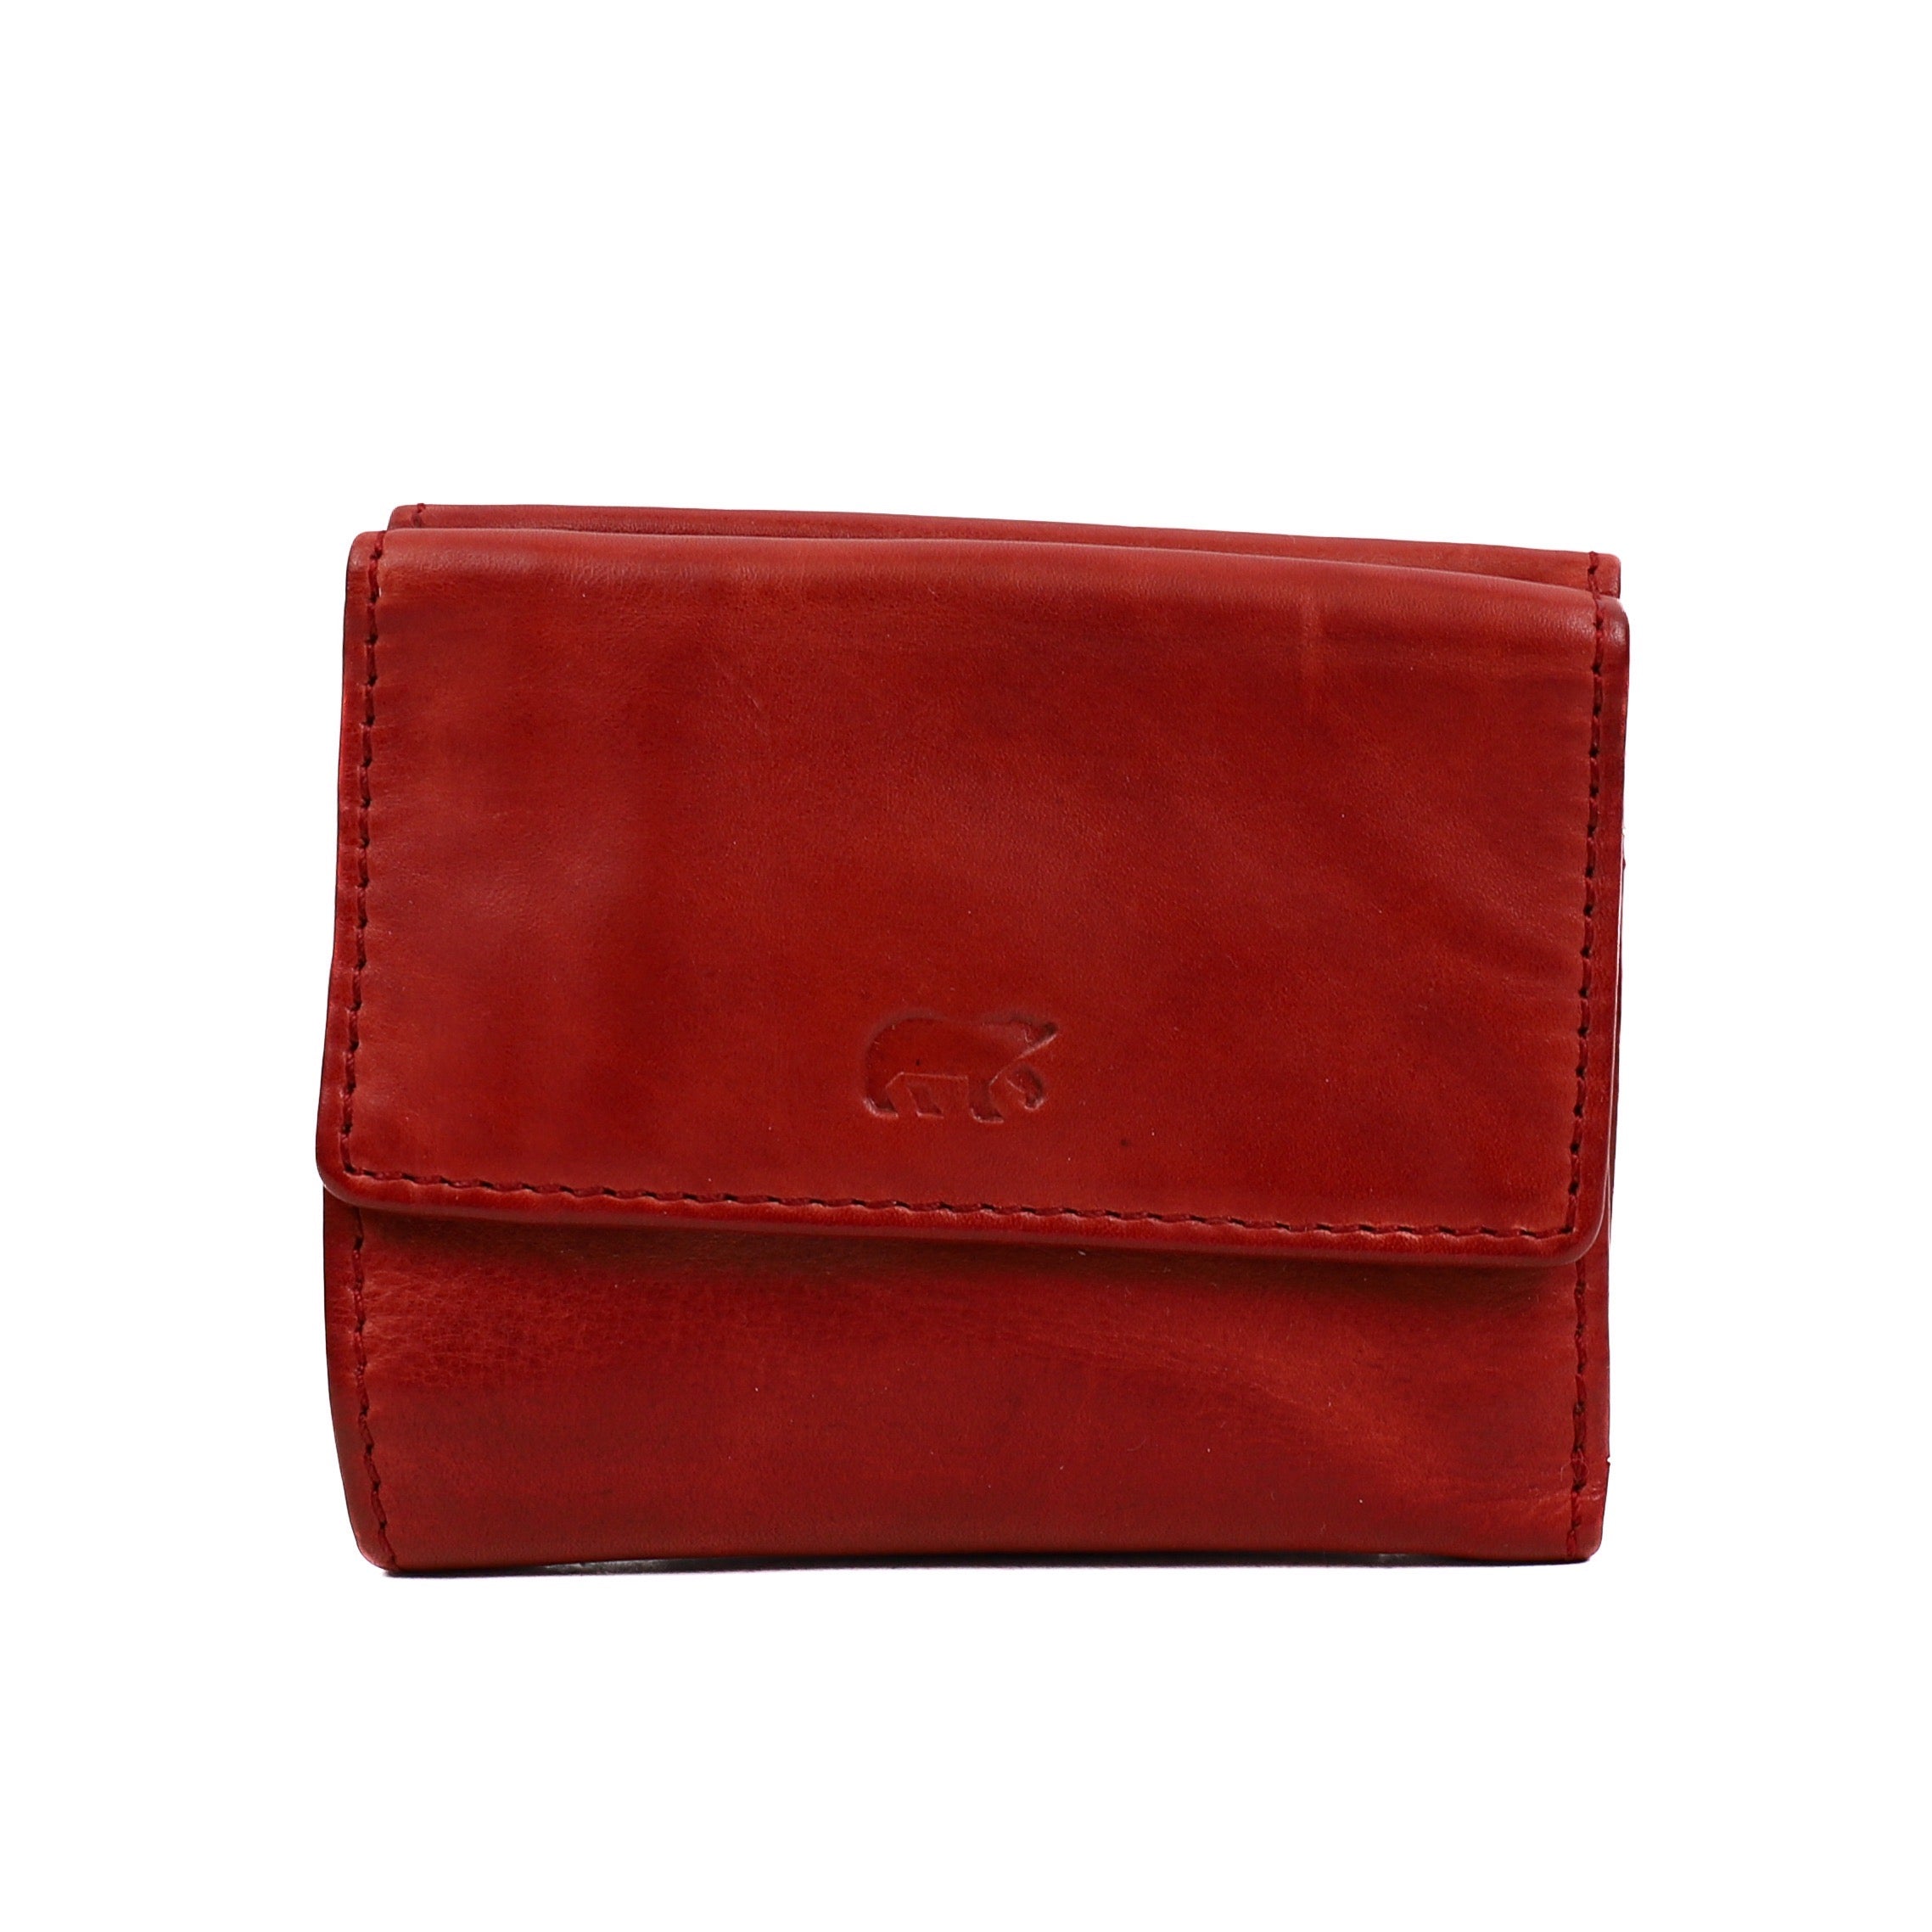 Wallet 'Jolie' red - CL 14618